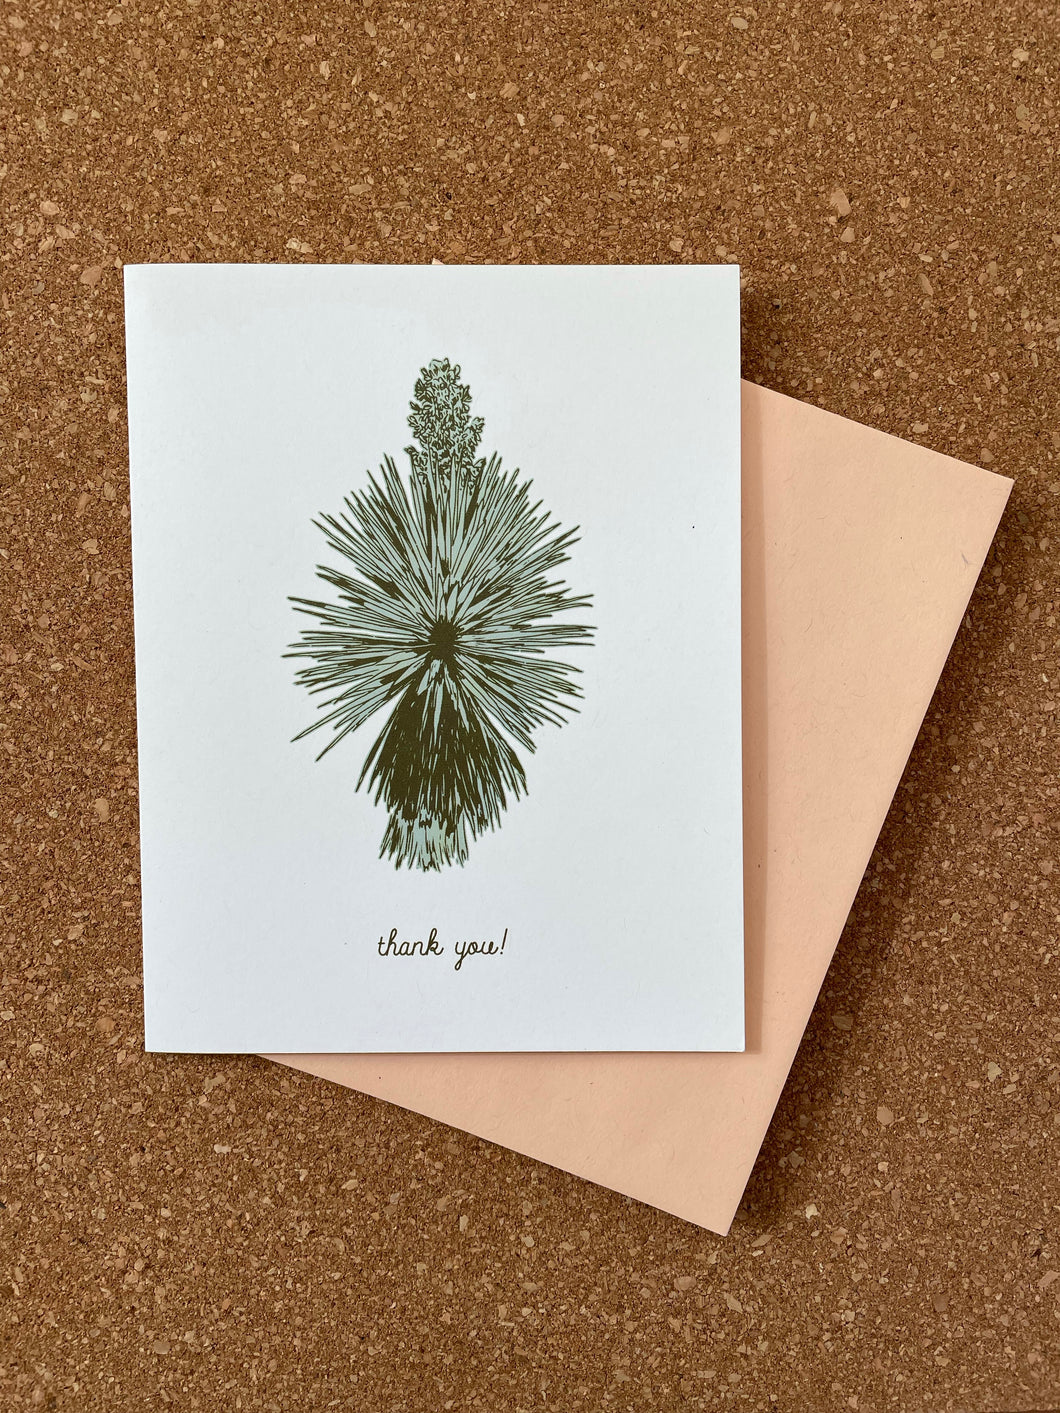 Mojave Yucca Greeting Card - thank you!